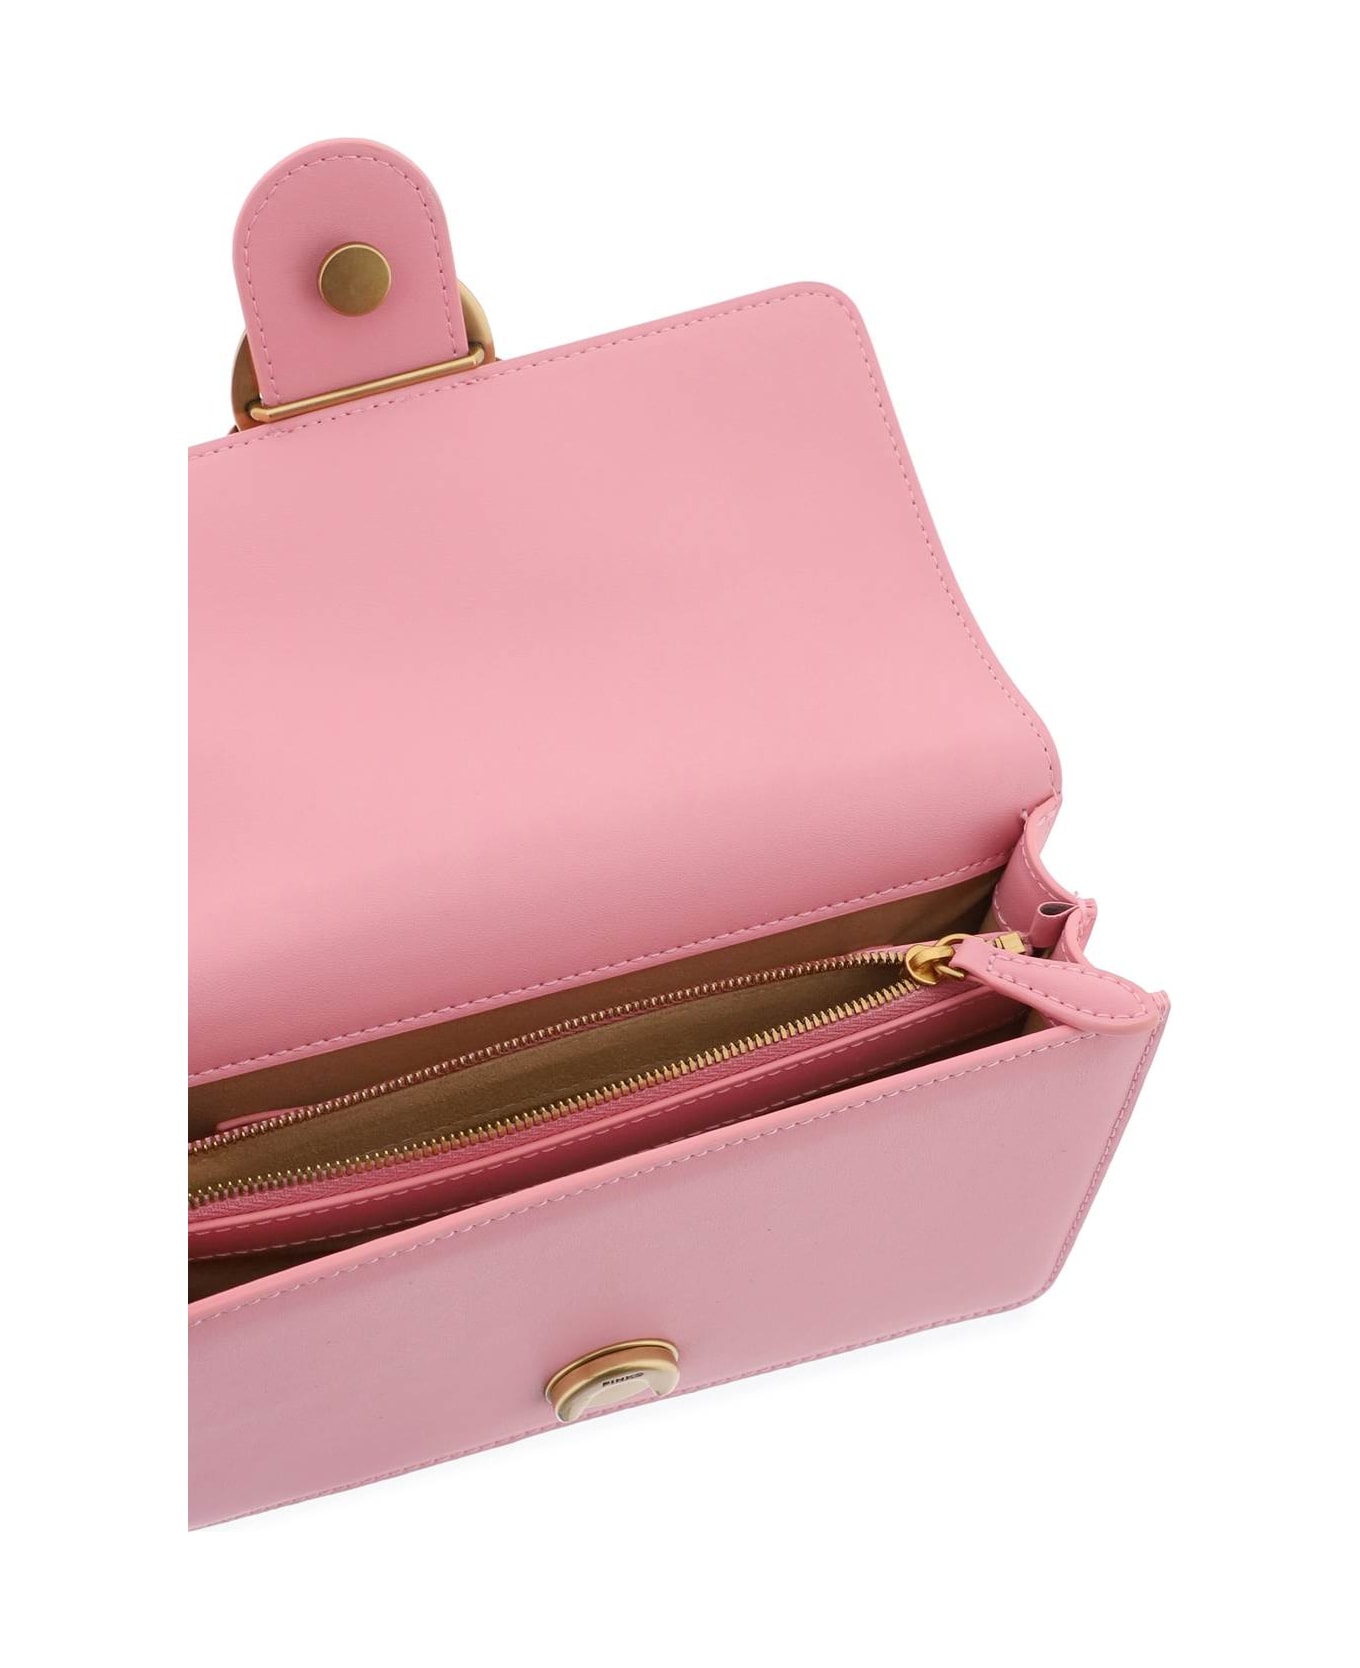 Pinko Mini Love Bag One Simply Shoulder Bag - ROSA MARINO ANTIQUE GOLD (Pink) ショルダーバッグ